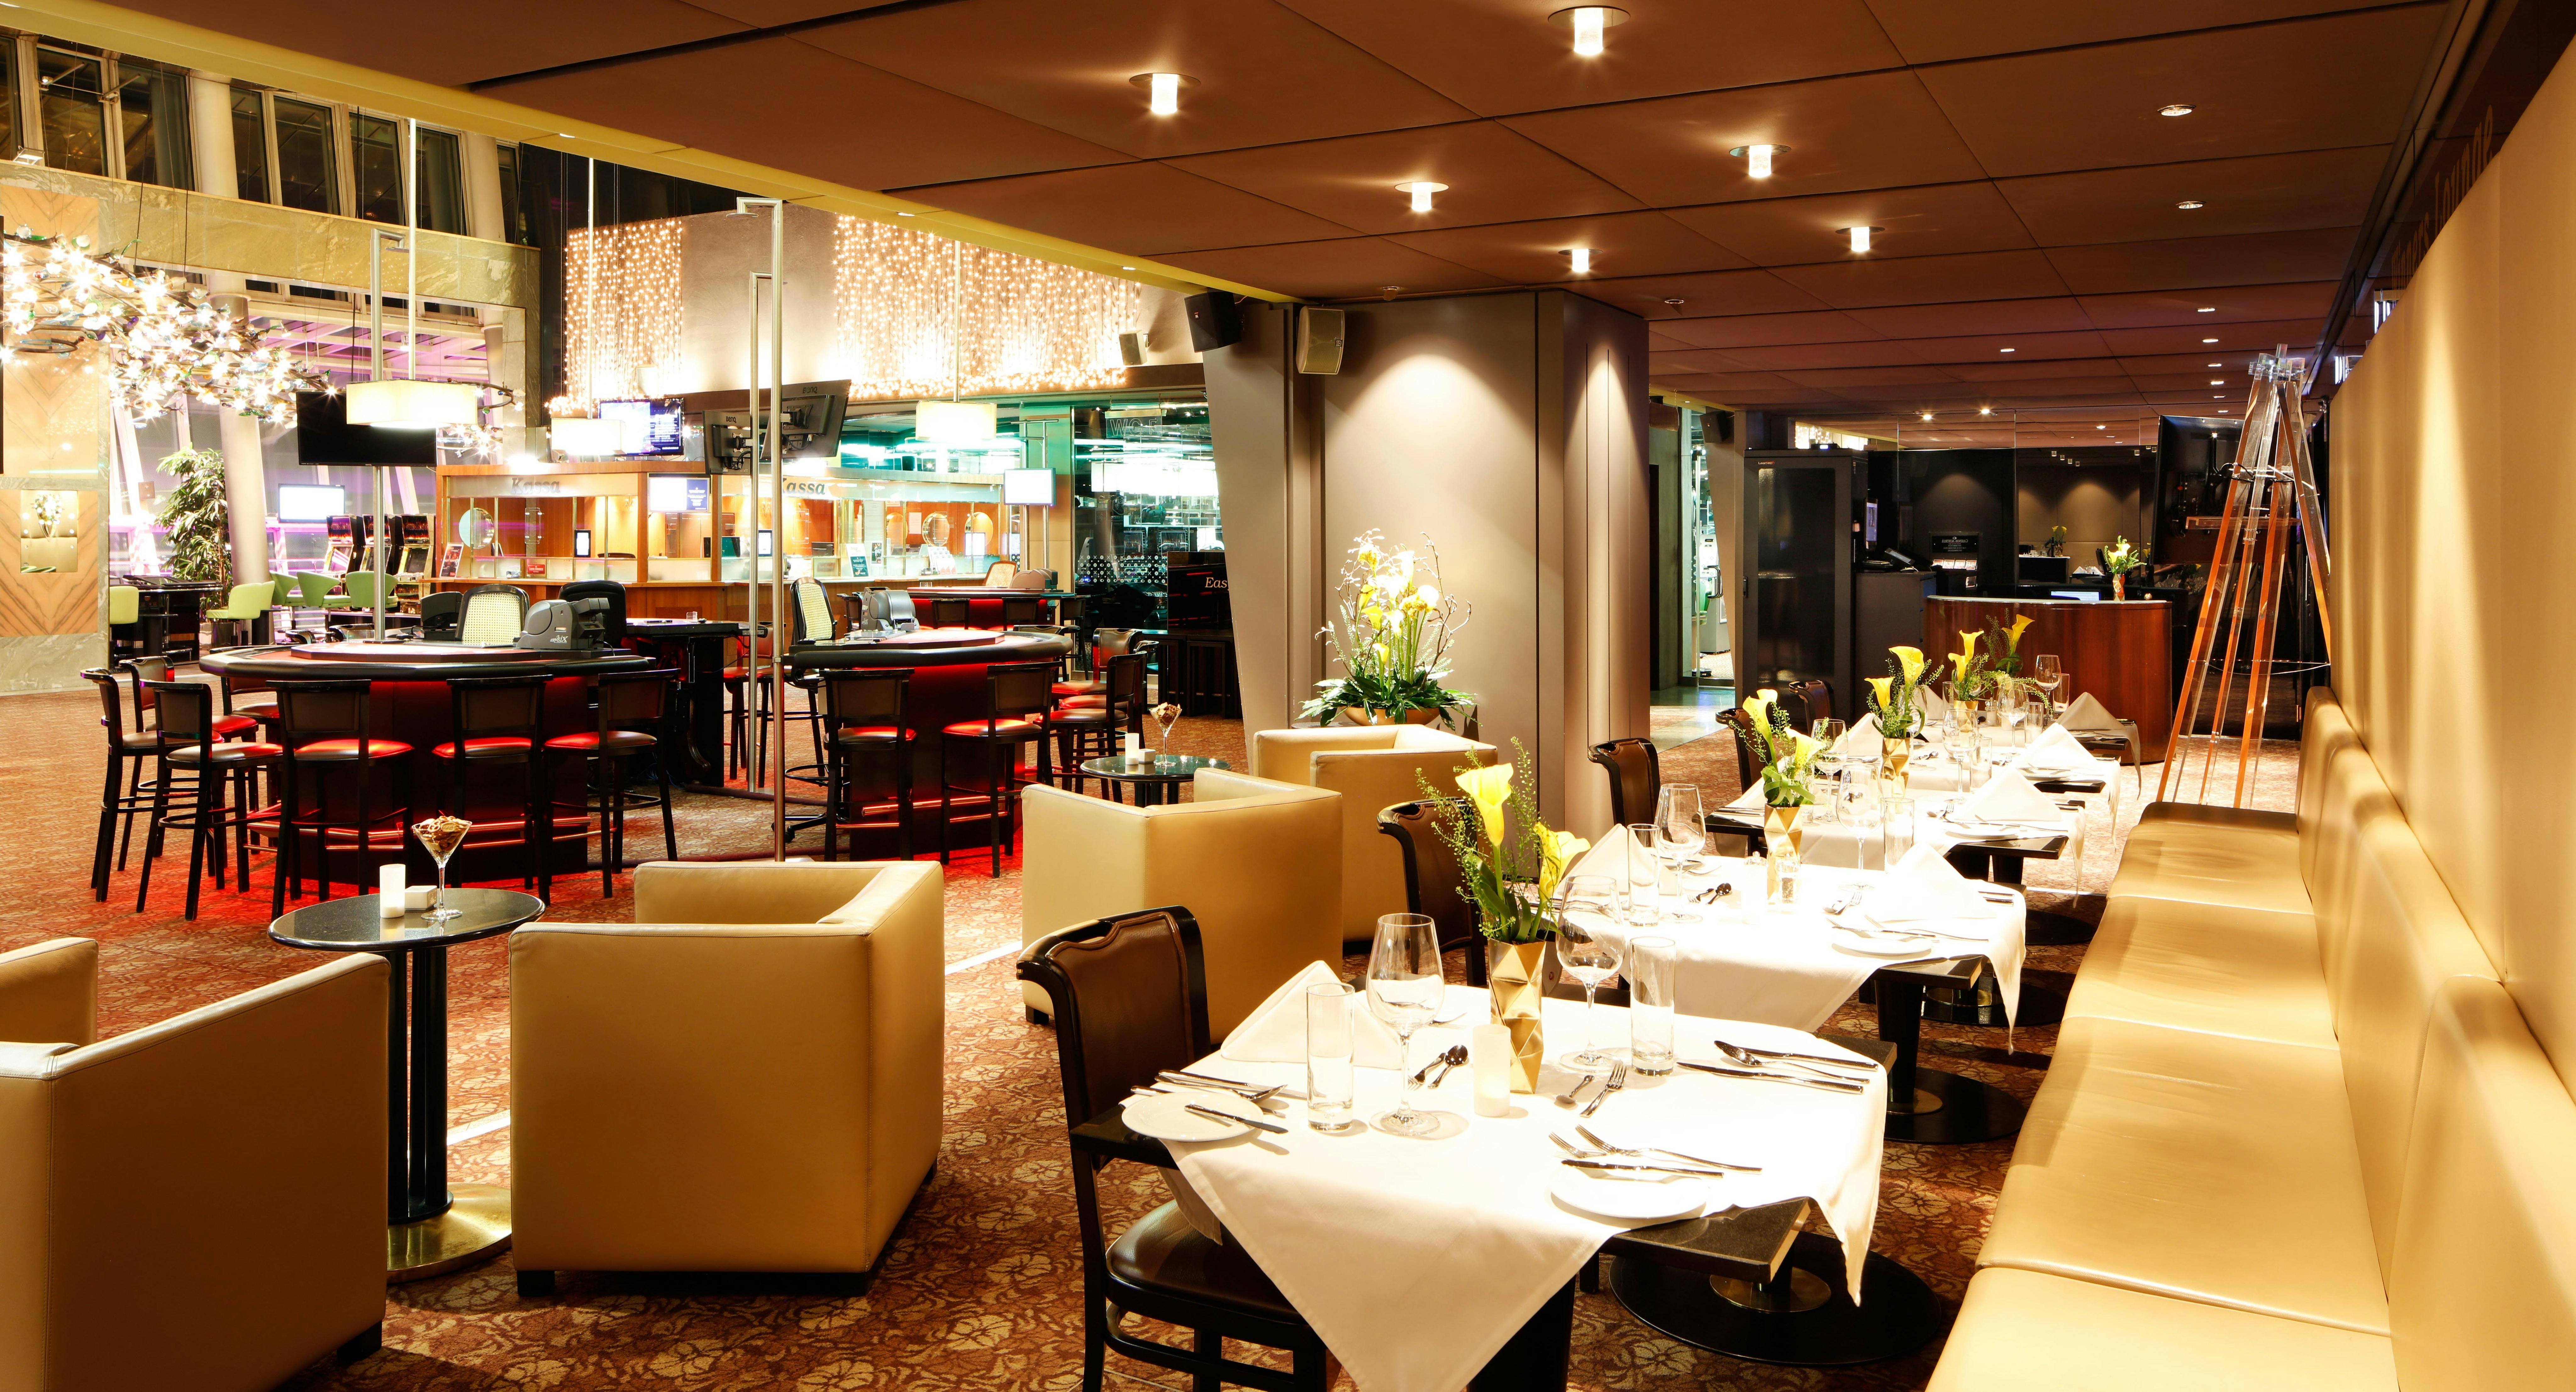 Photo of restaurant Cuisino - Innsbruck in Wilten, Innsbruck